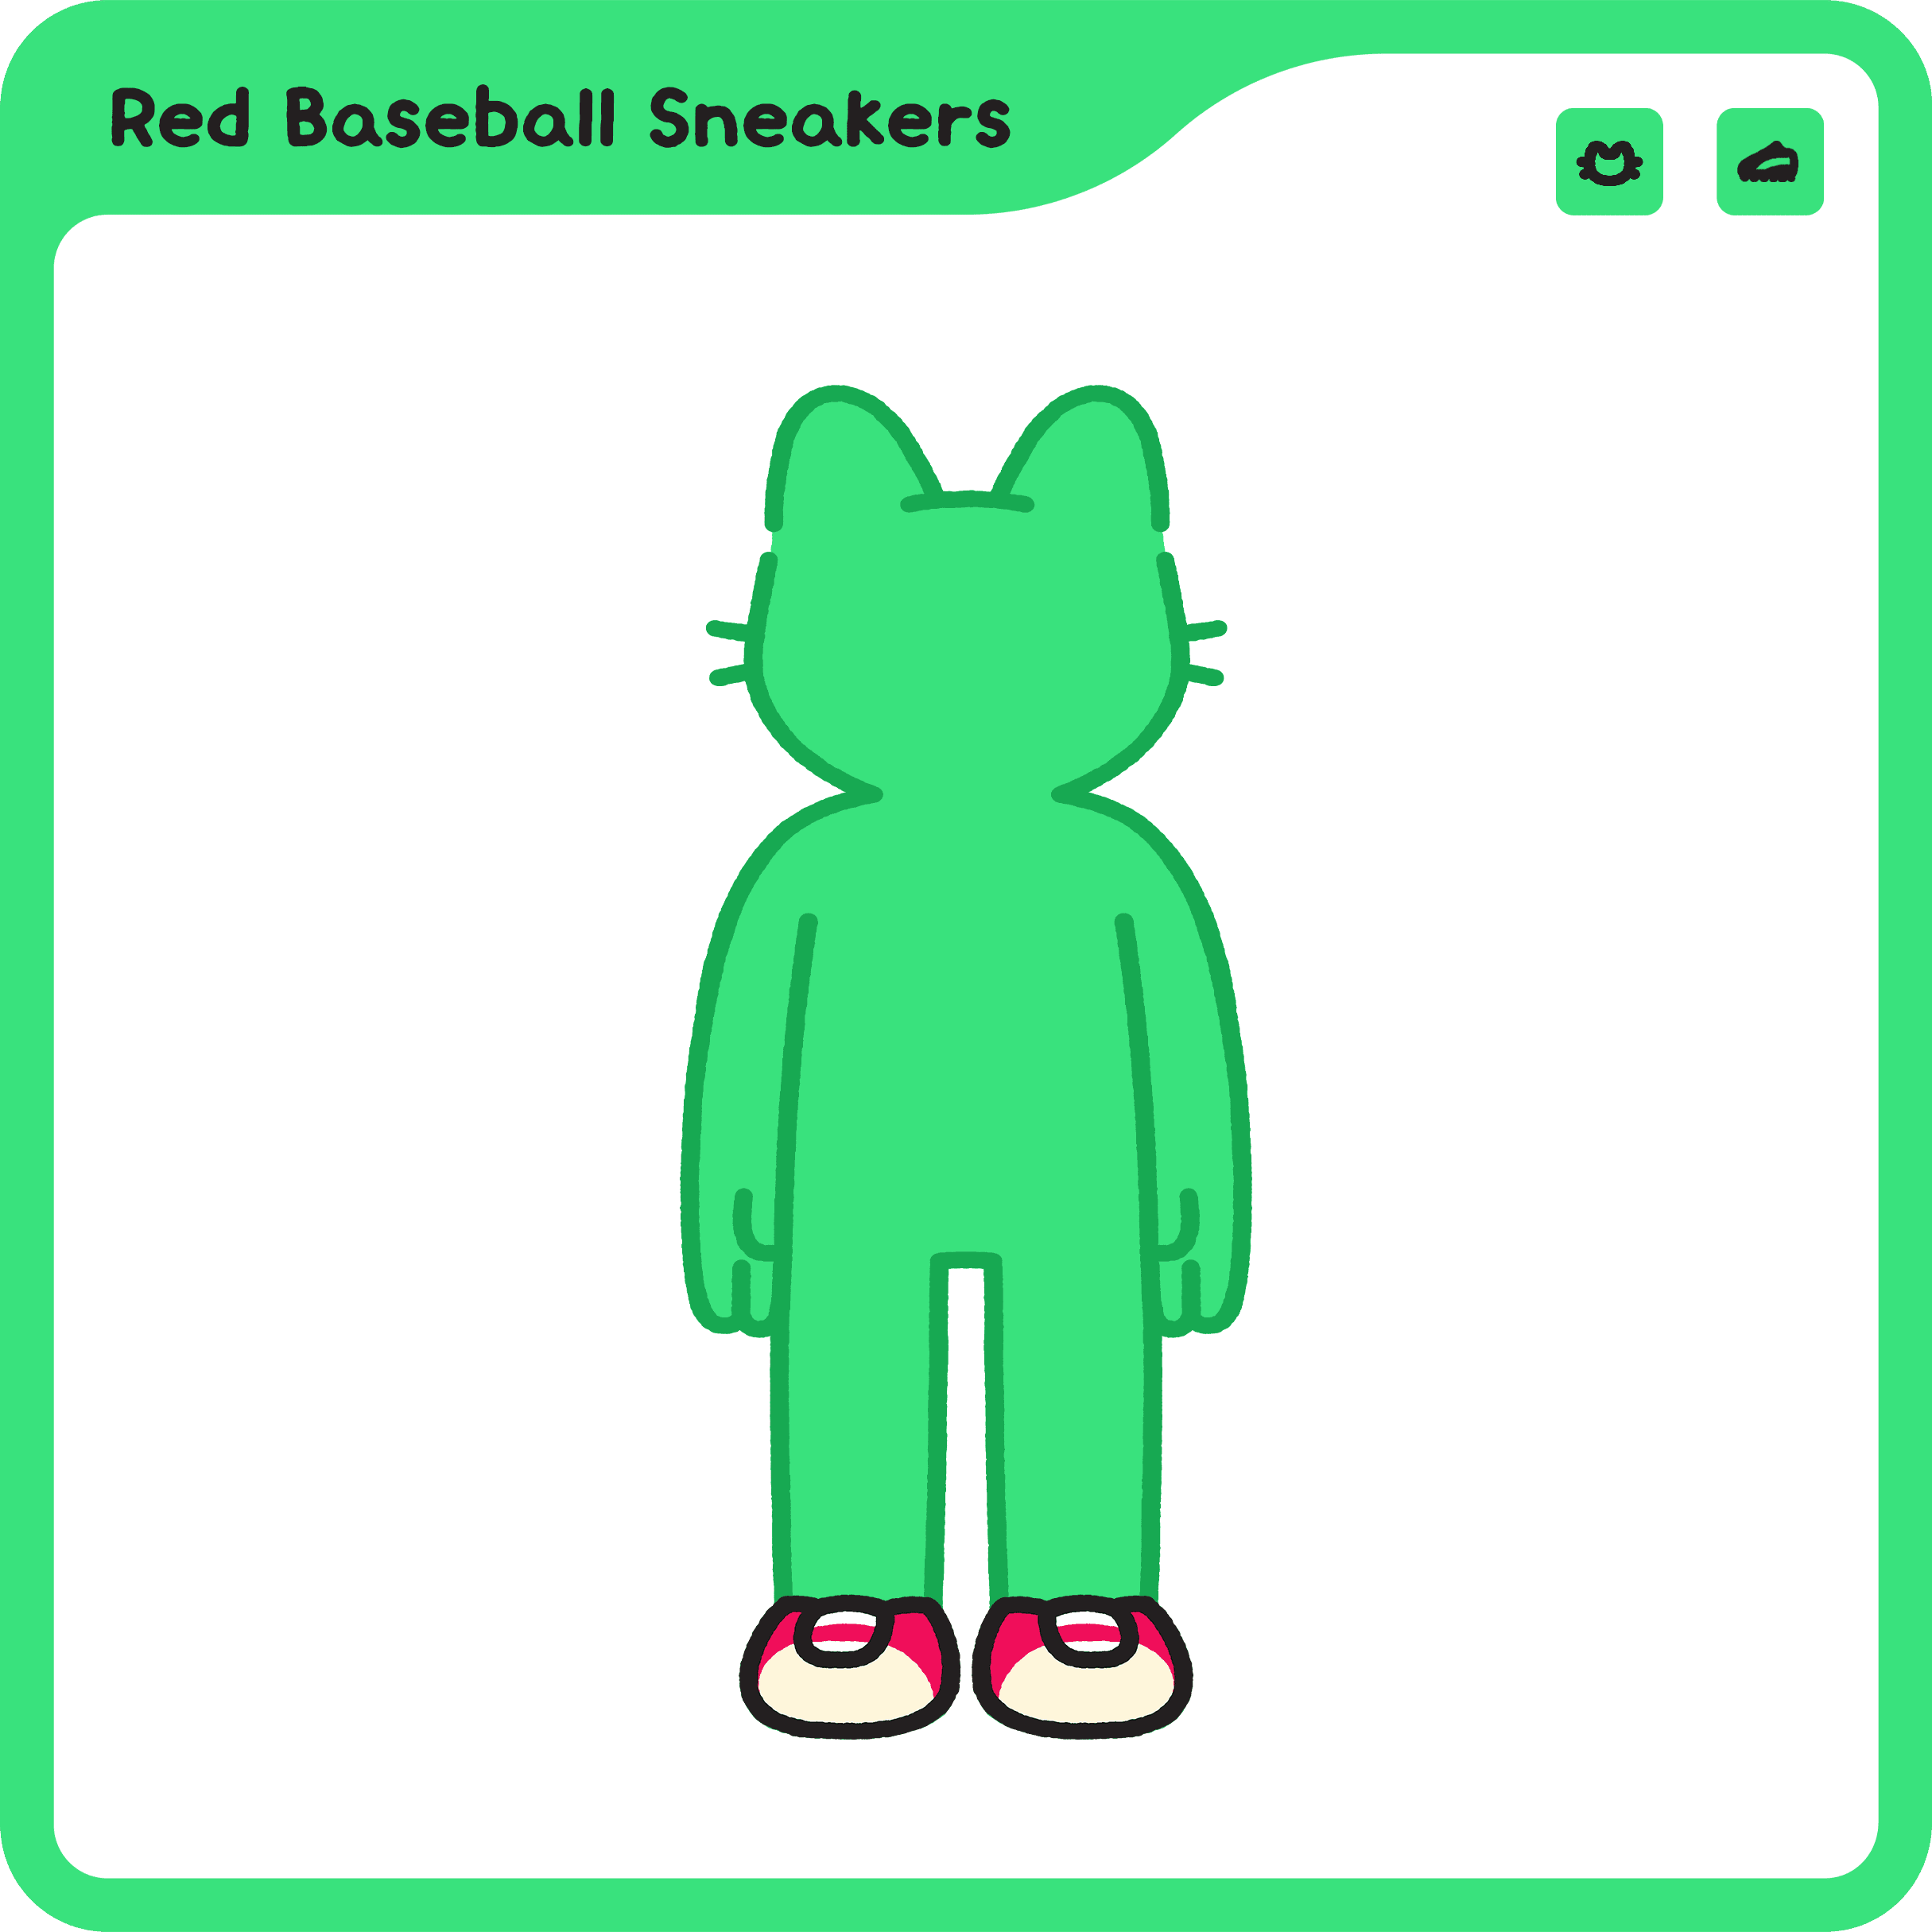 Red Baseball Sneakers